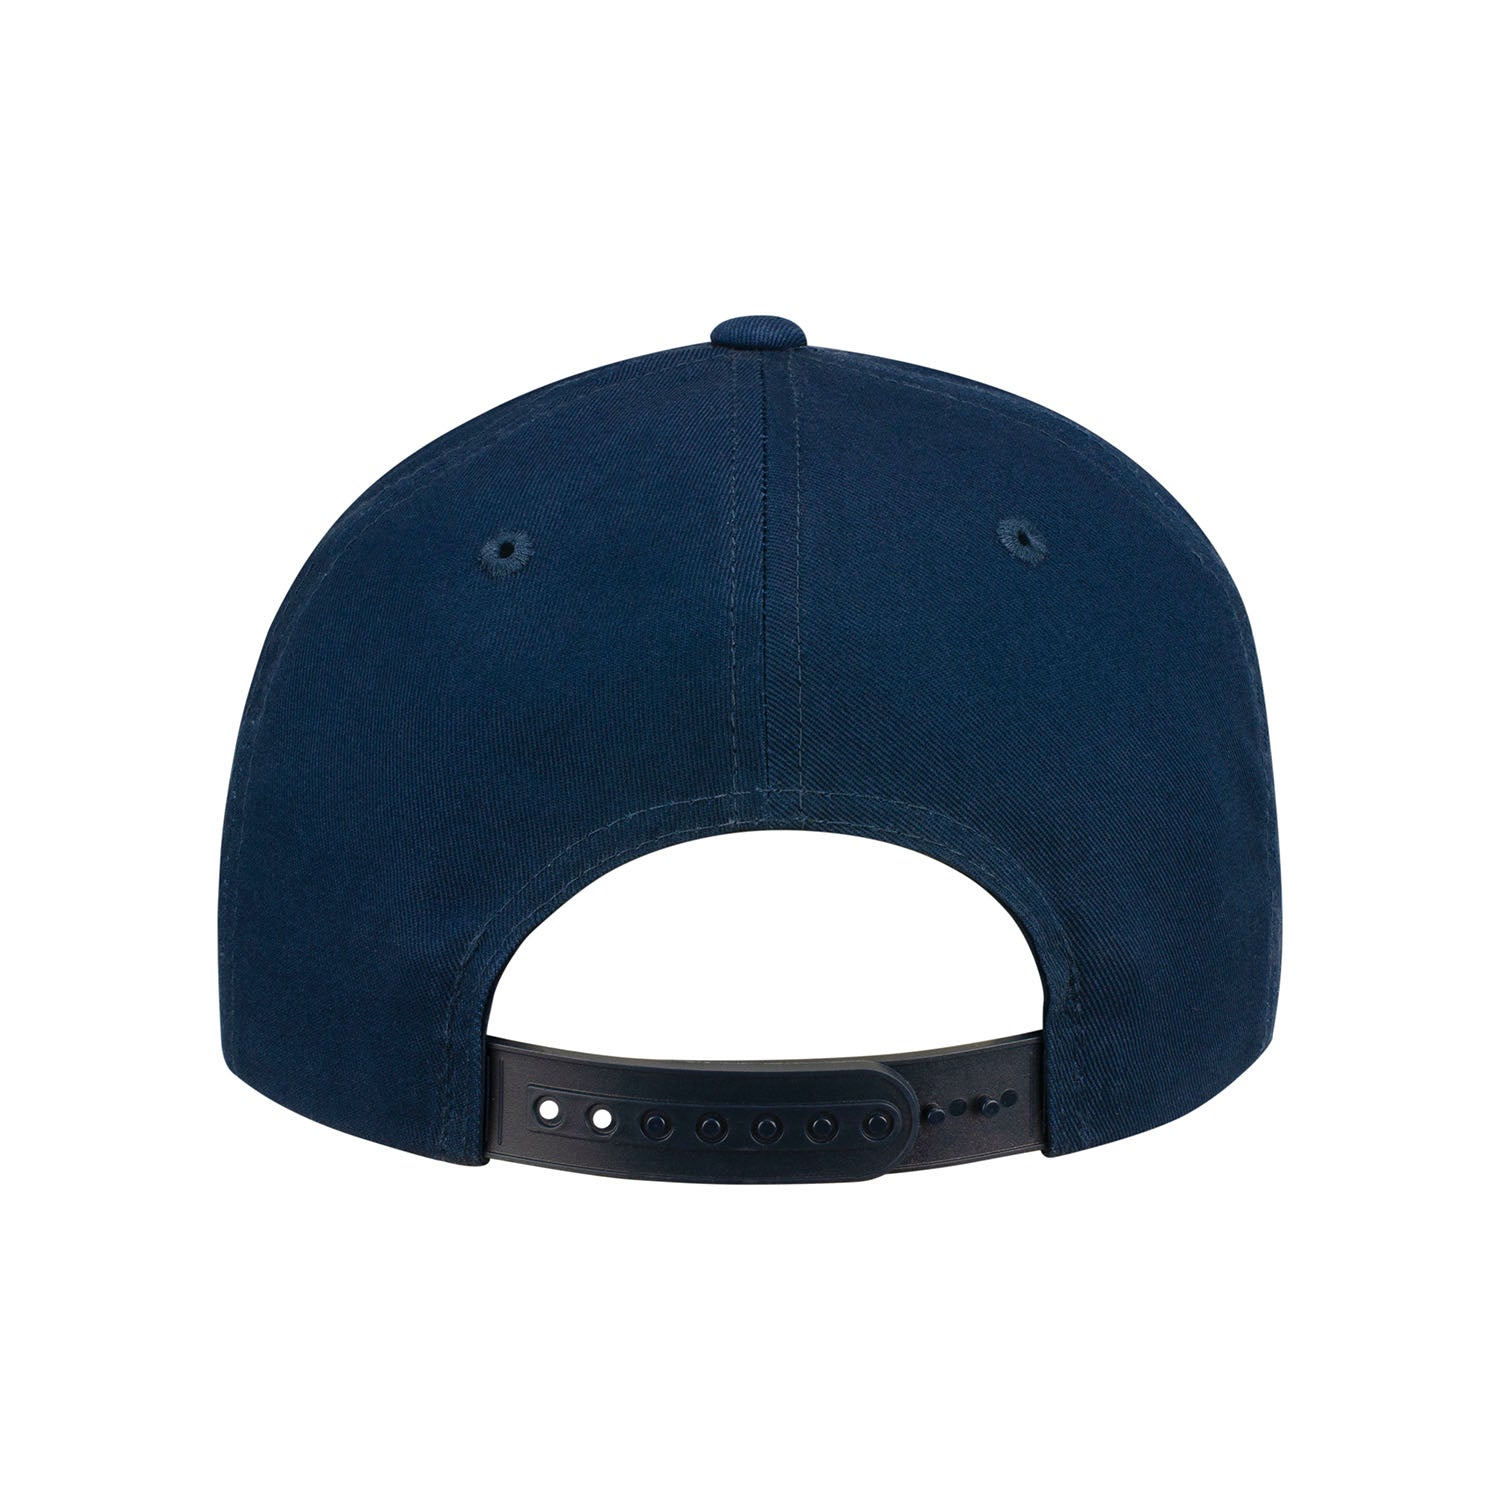 London Spitfire Blue Snapback Hat - Back View